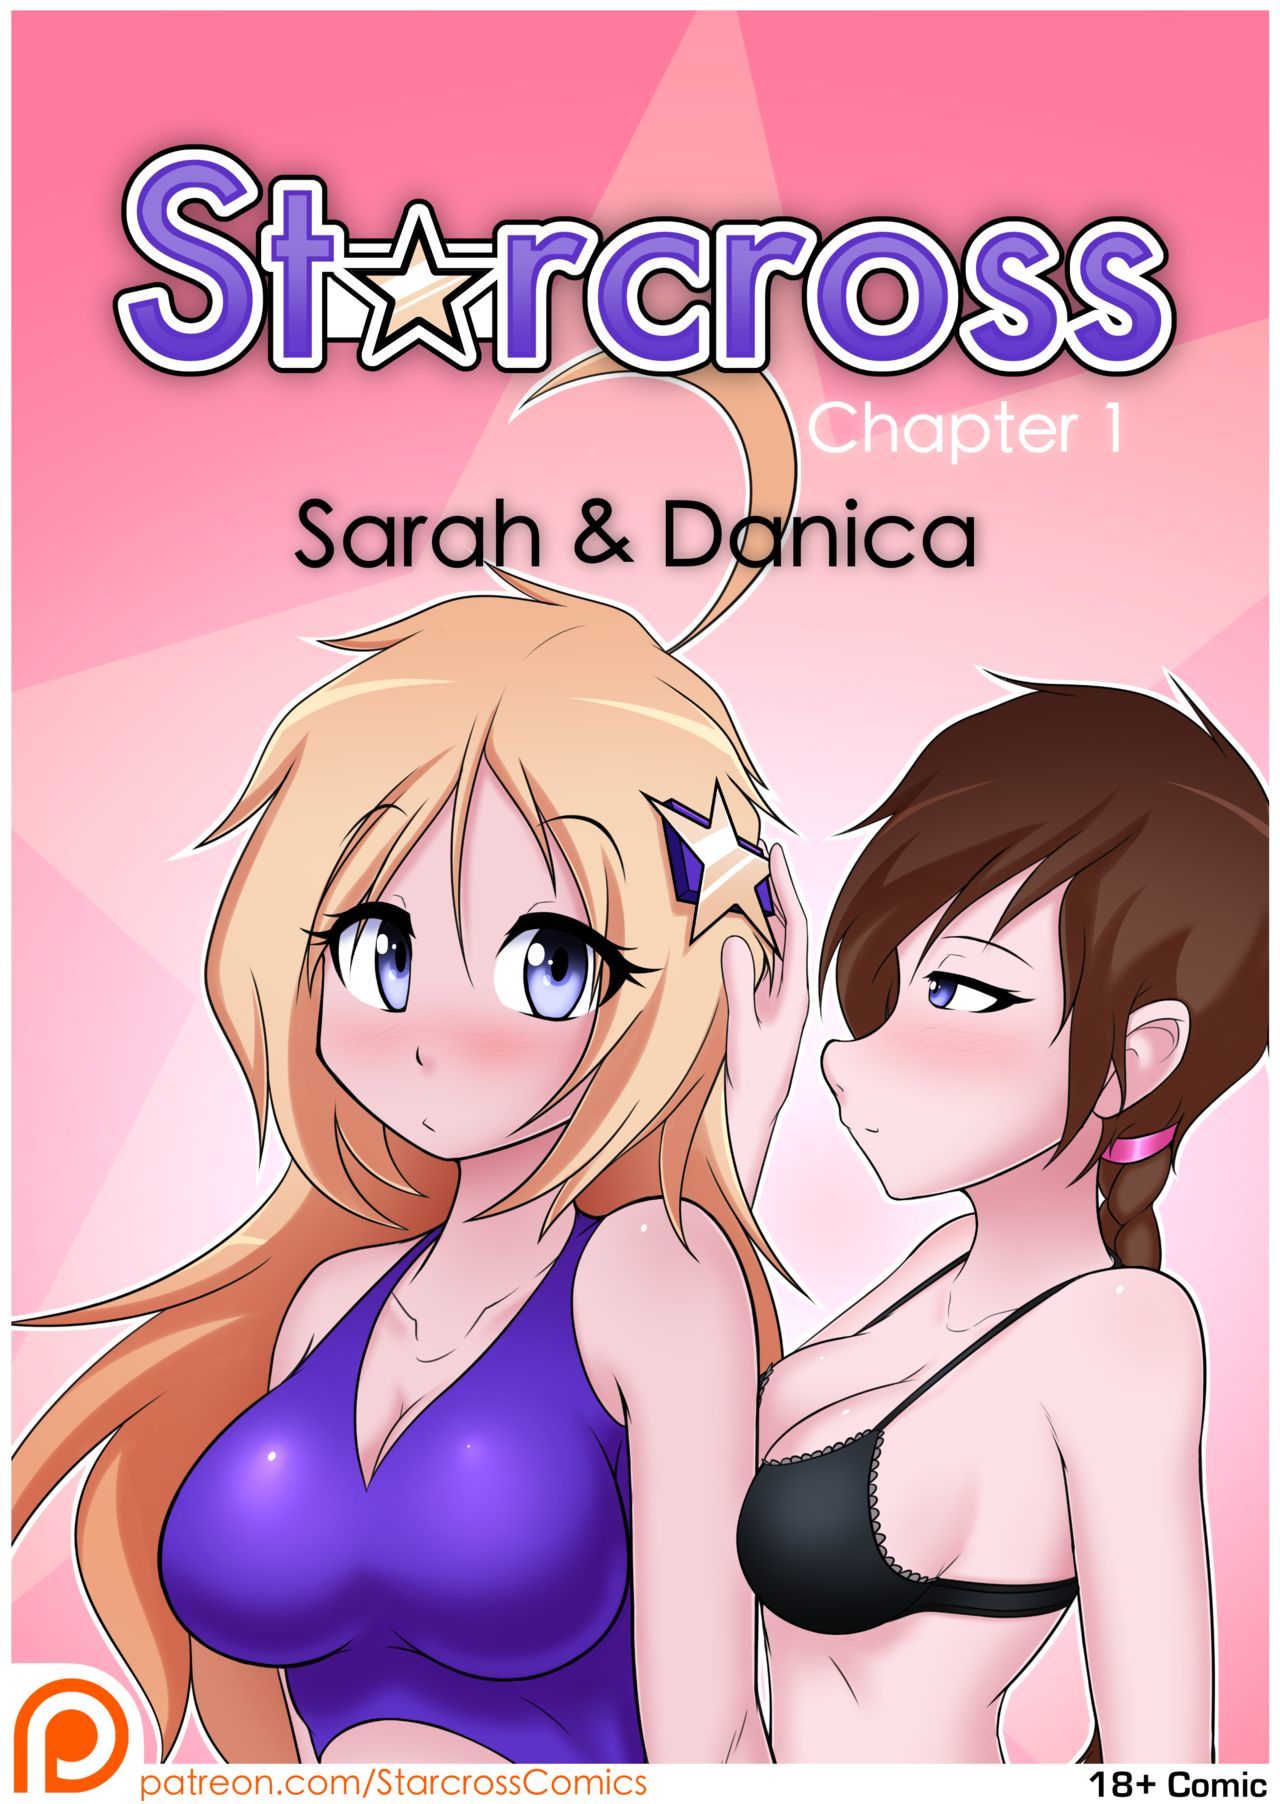 Starcross Sarah & Danica page 1